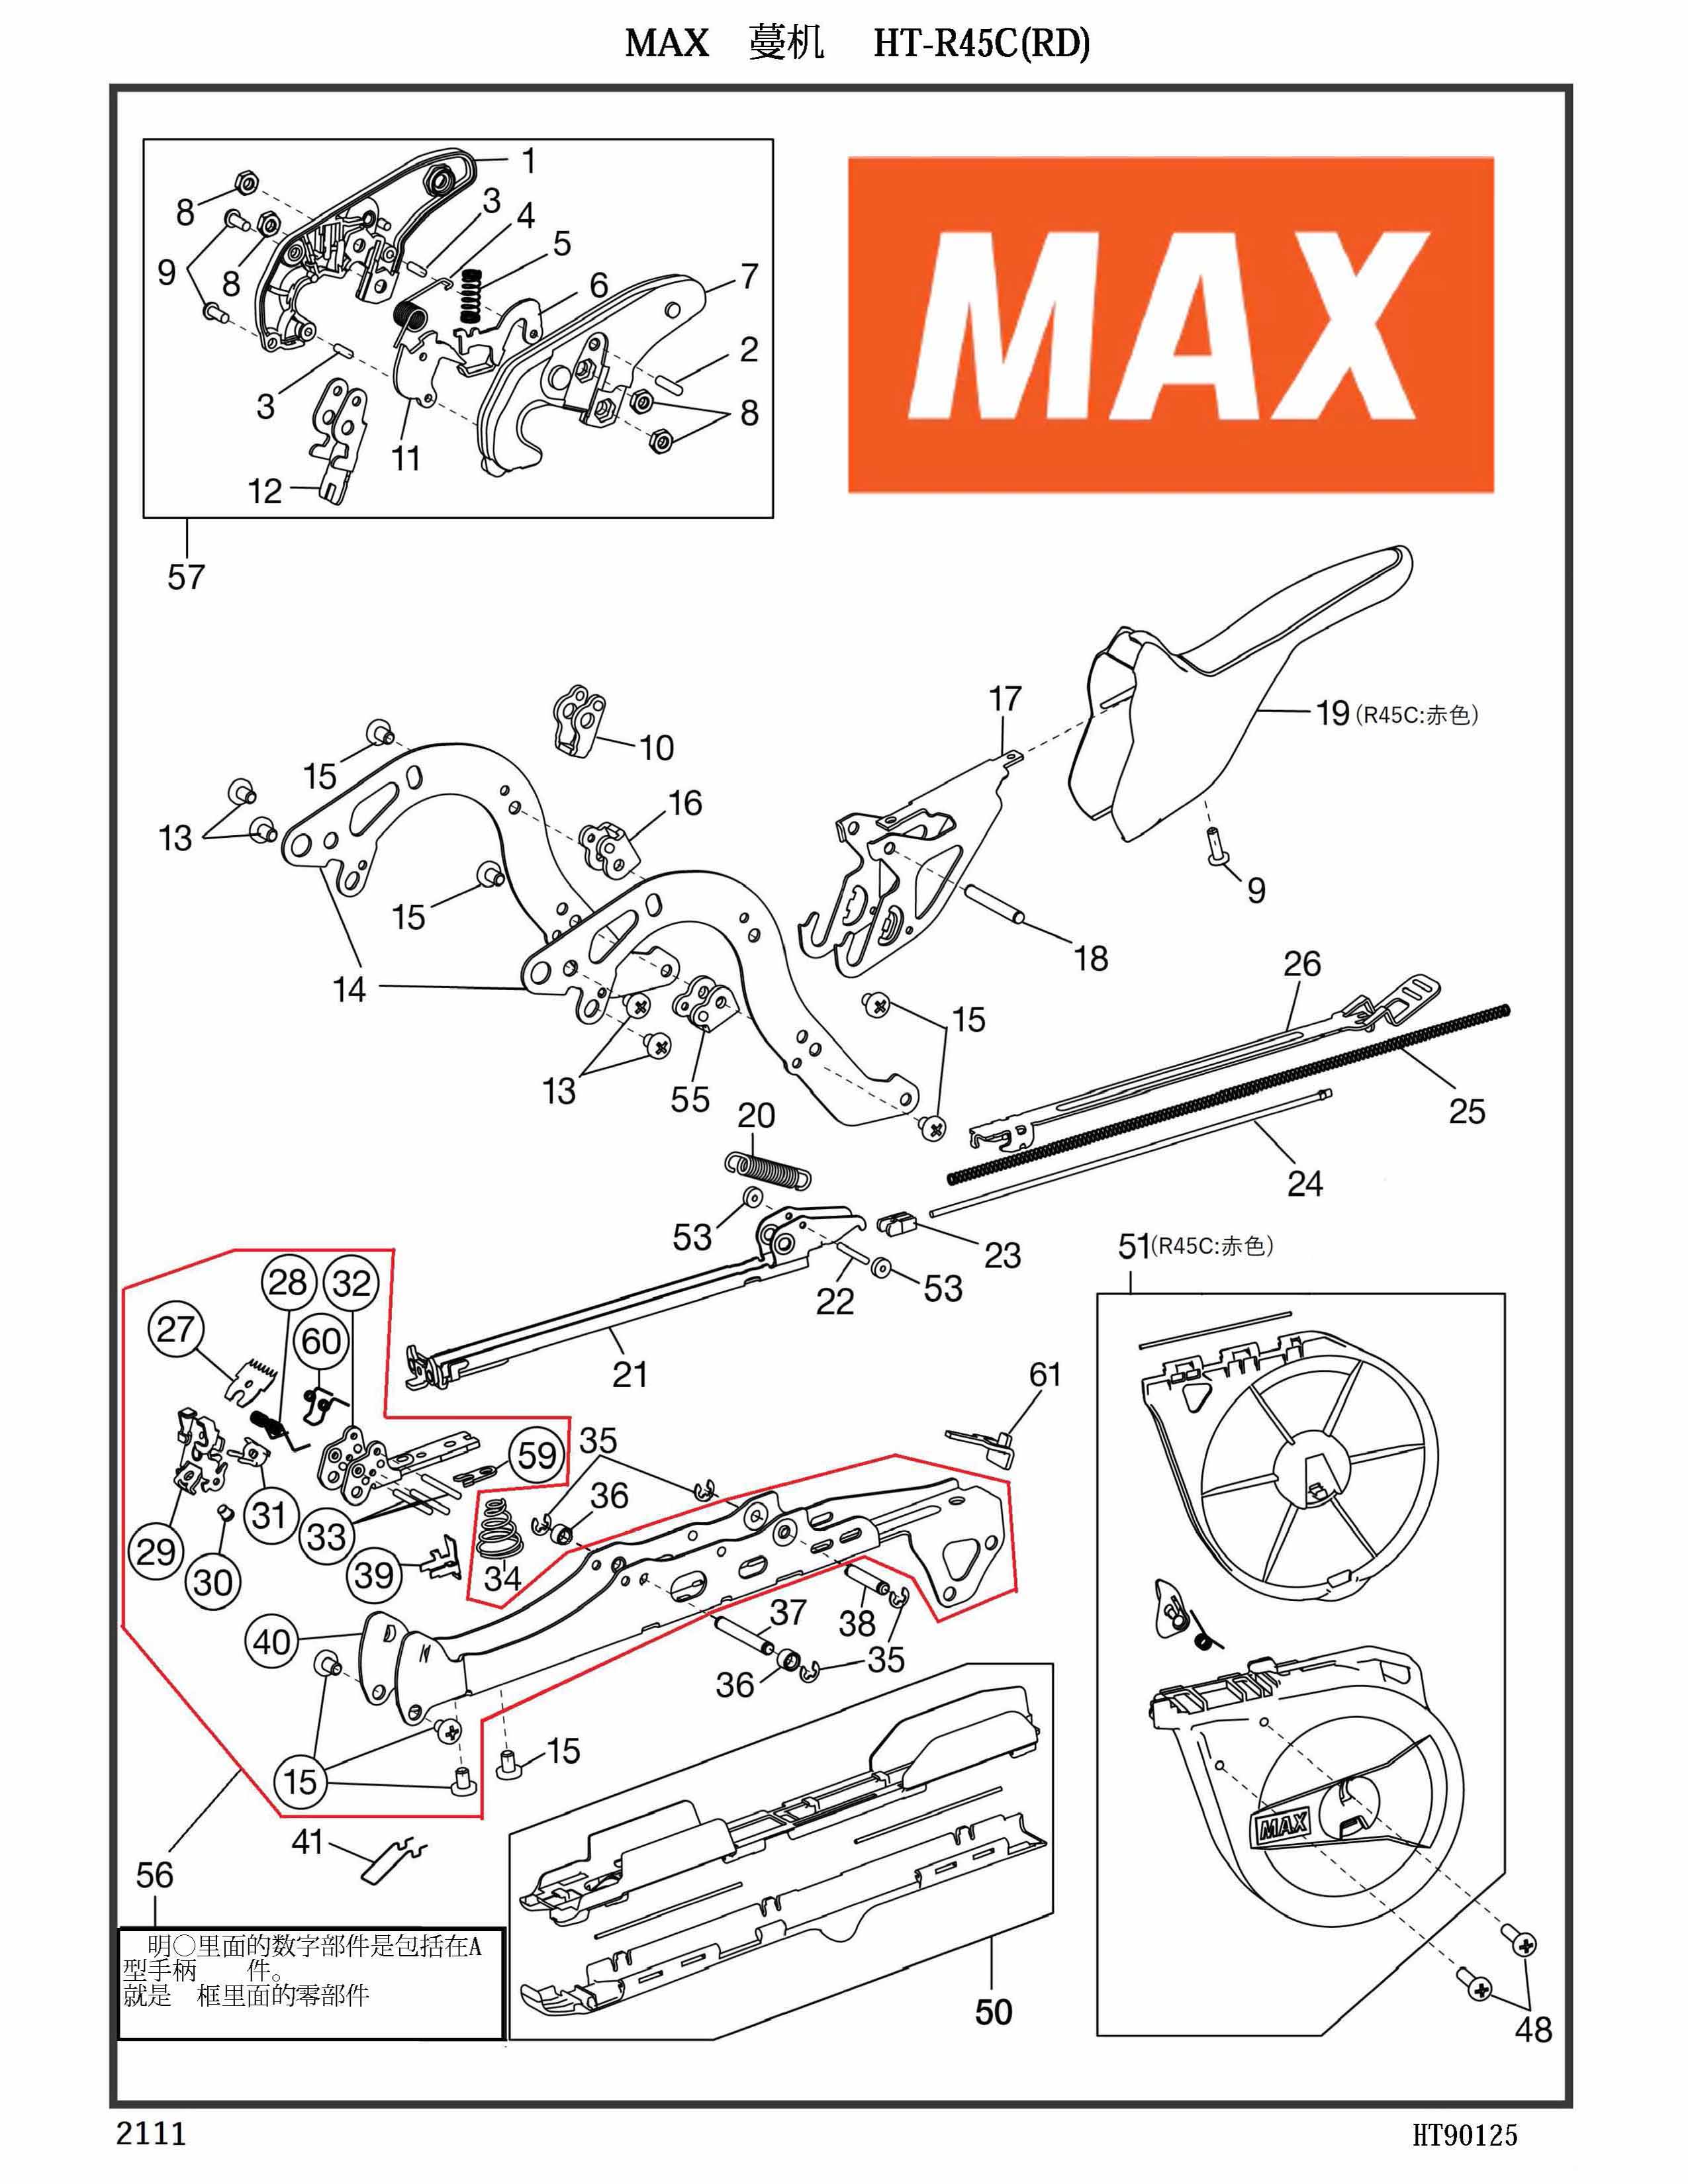 MAX Tapener HT-R45L HT-R45S Parts Diagram